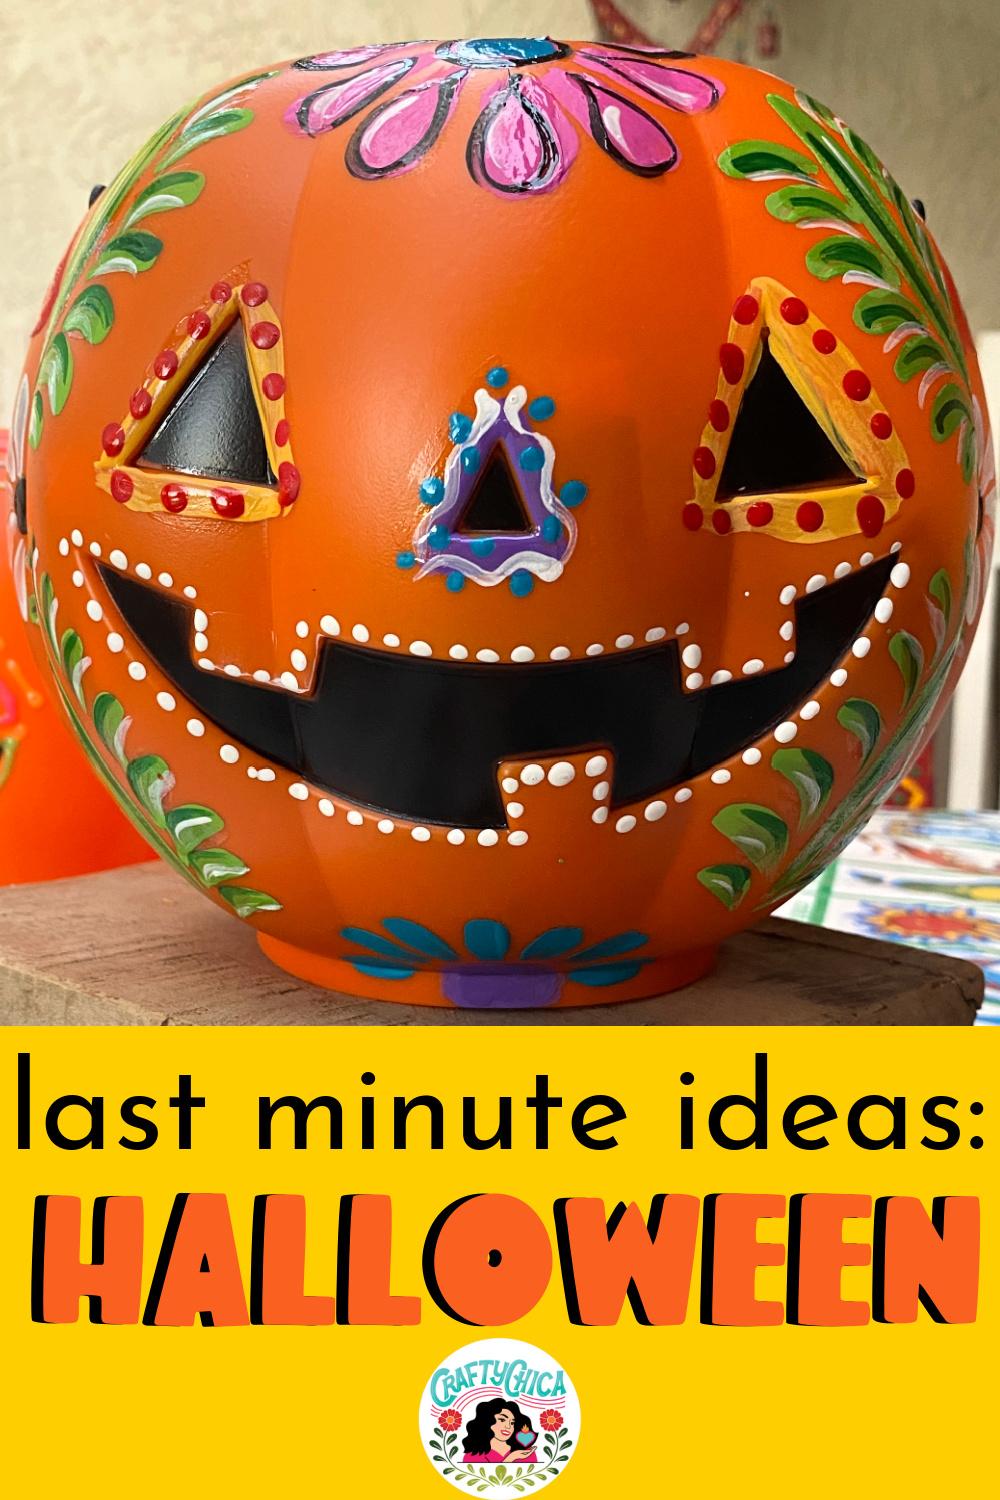 Ladt minute Halloween ideas